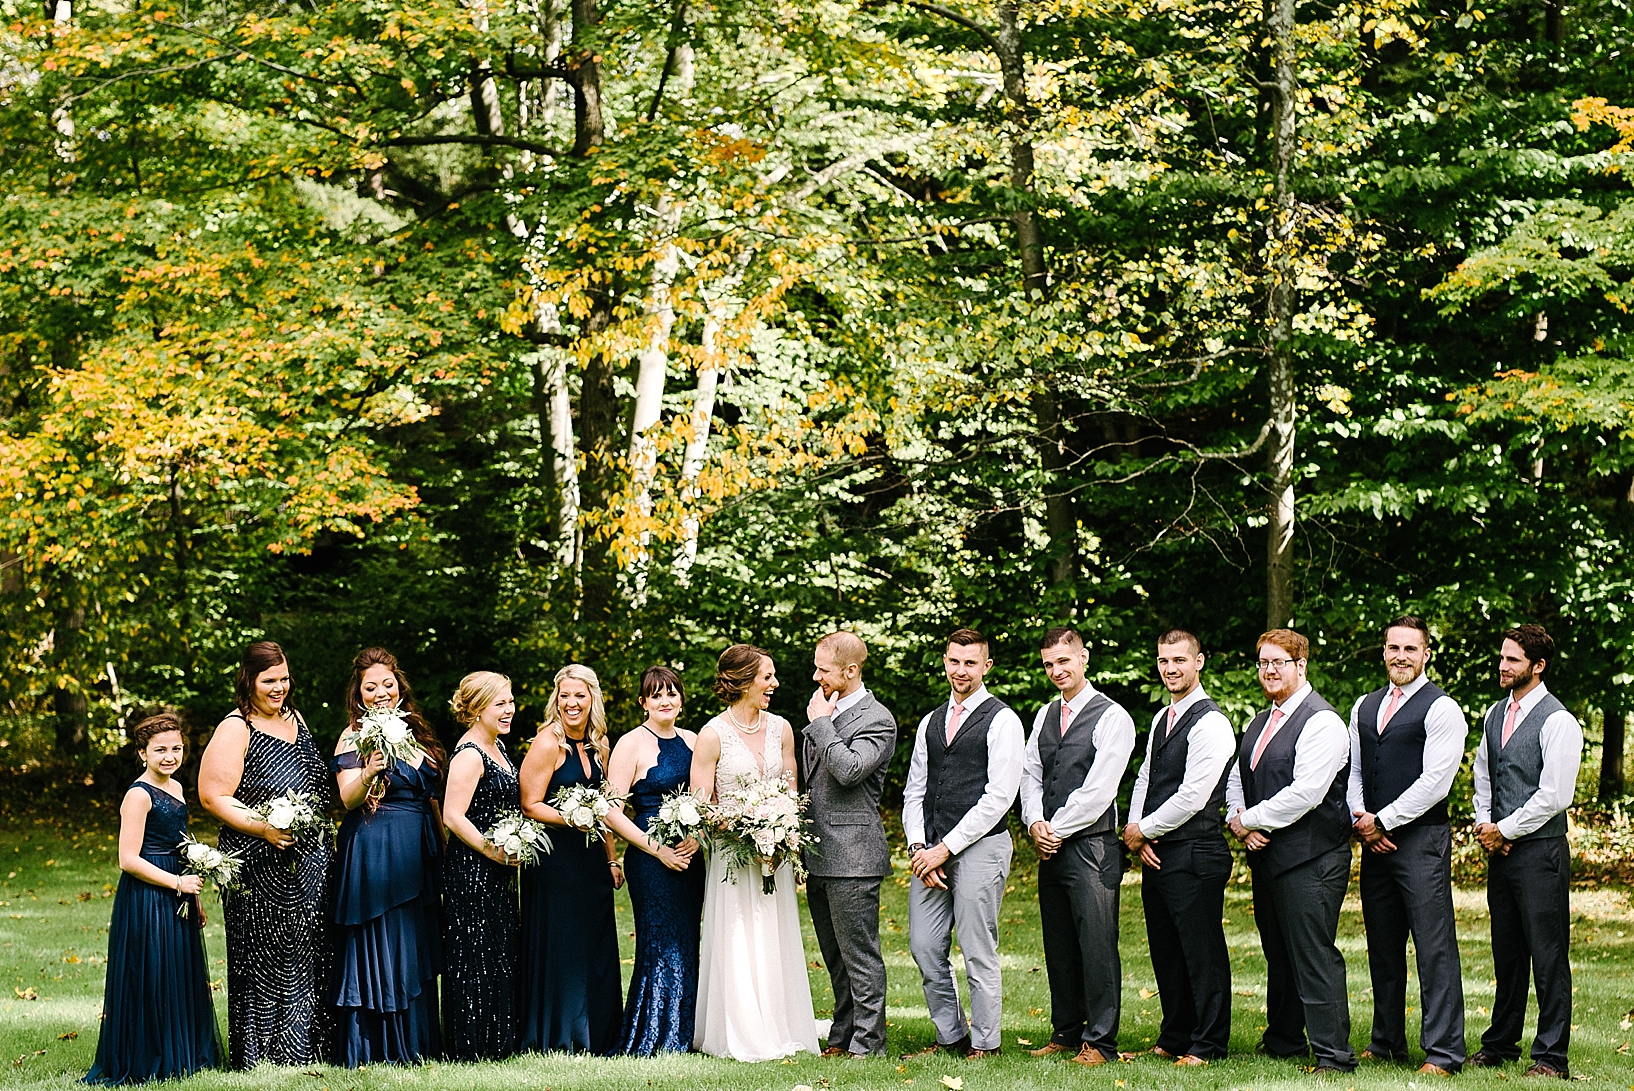 October wedding bridal party in navy and grey